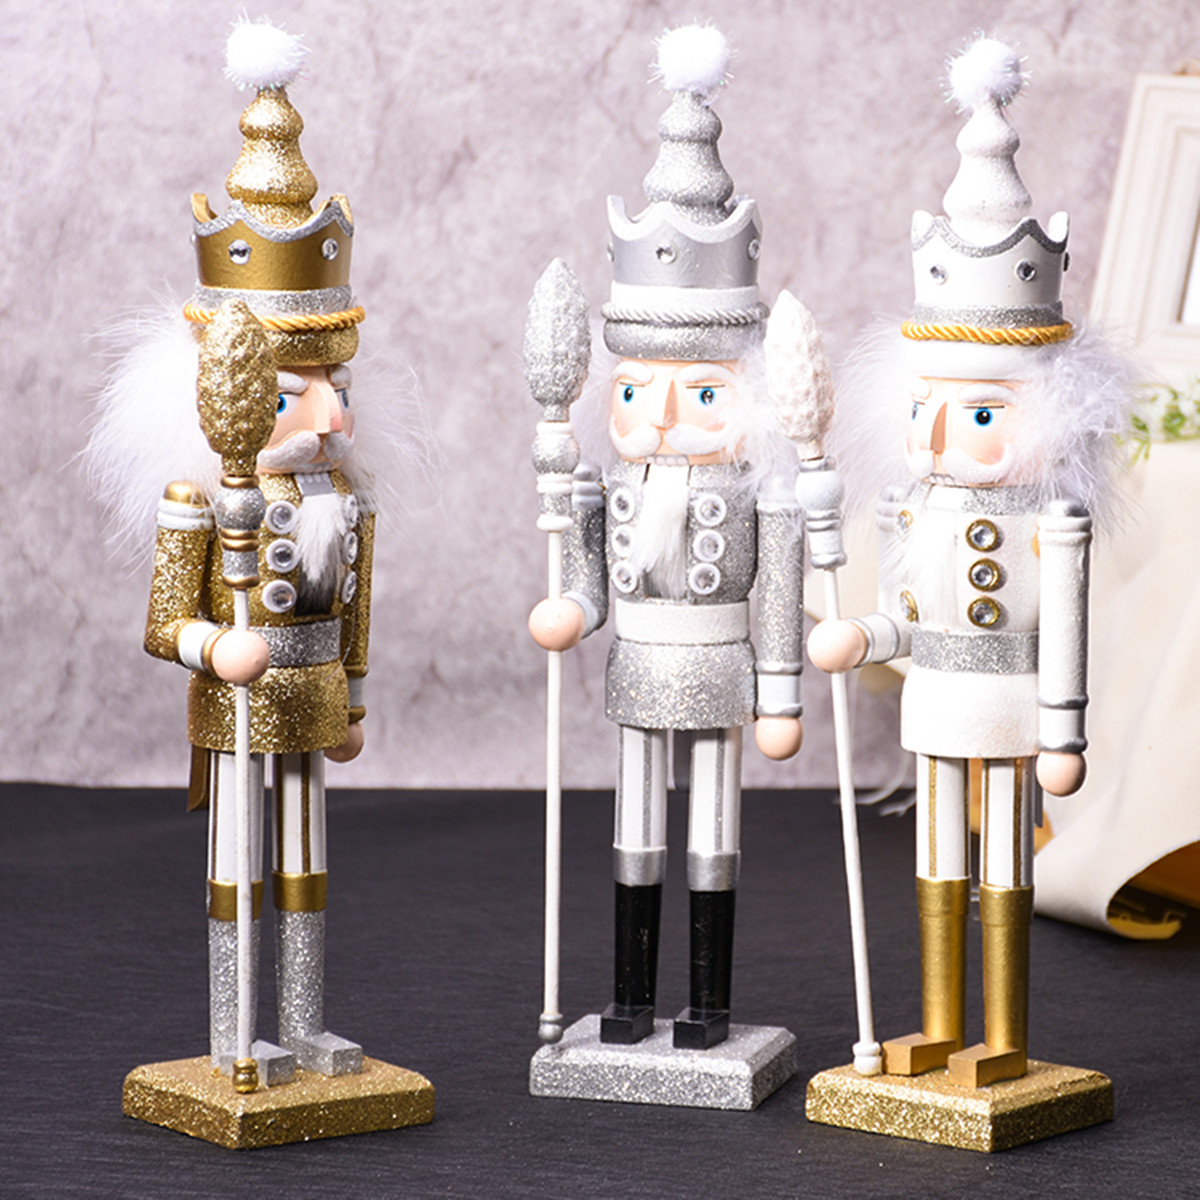 42cm-Wooden-Nutcracker-Doll-Soldier-Vintage-Handcraft-Decoration-Christmas-Action-Figure-Gifts-1386592-2